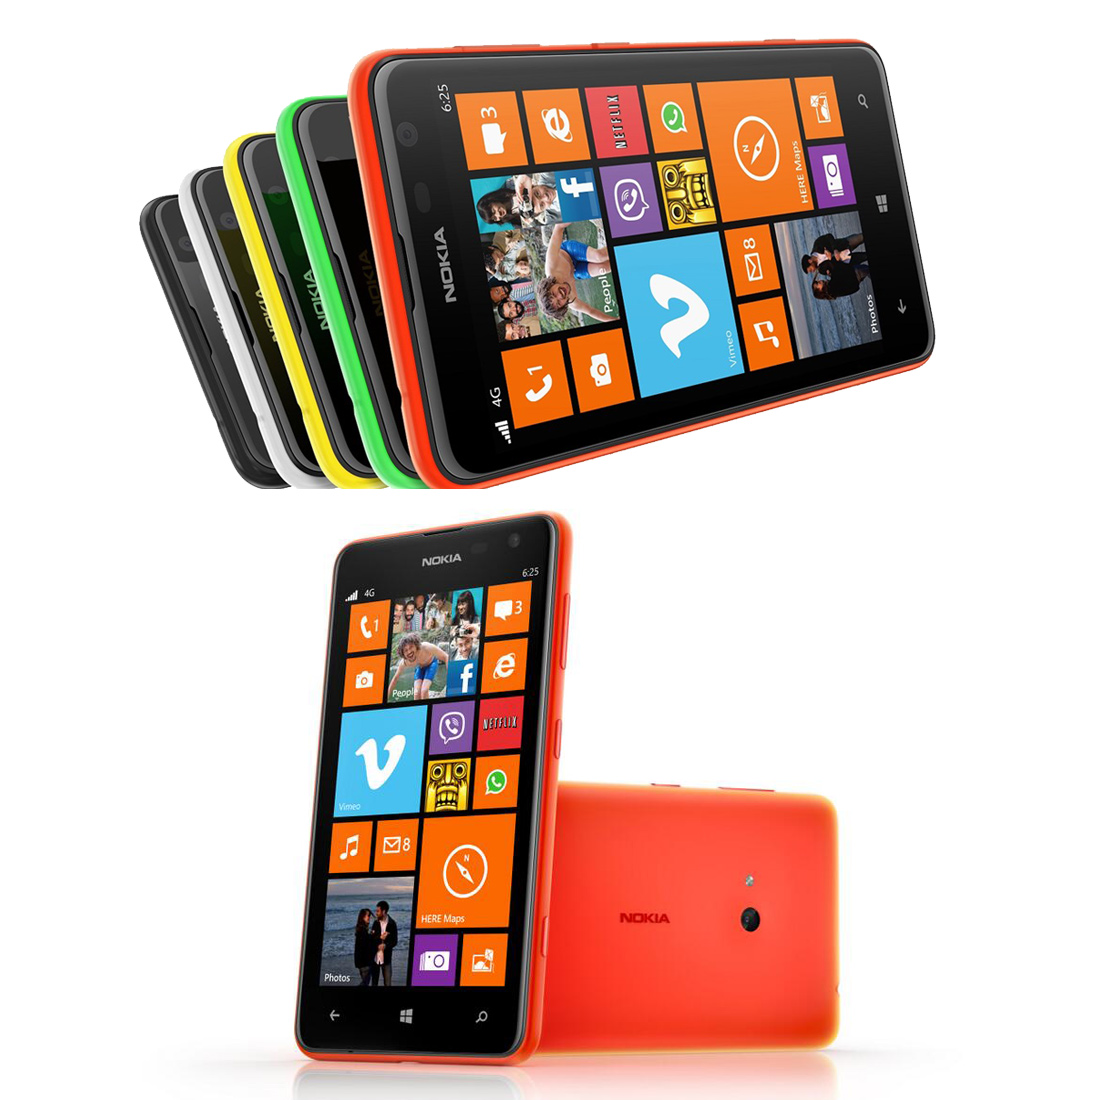 Nokia Lumia 625 Harga Terjangkau, Spesifikasi Gahar